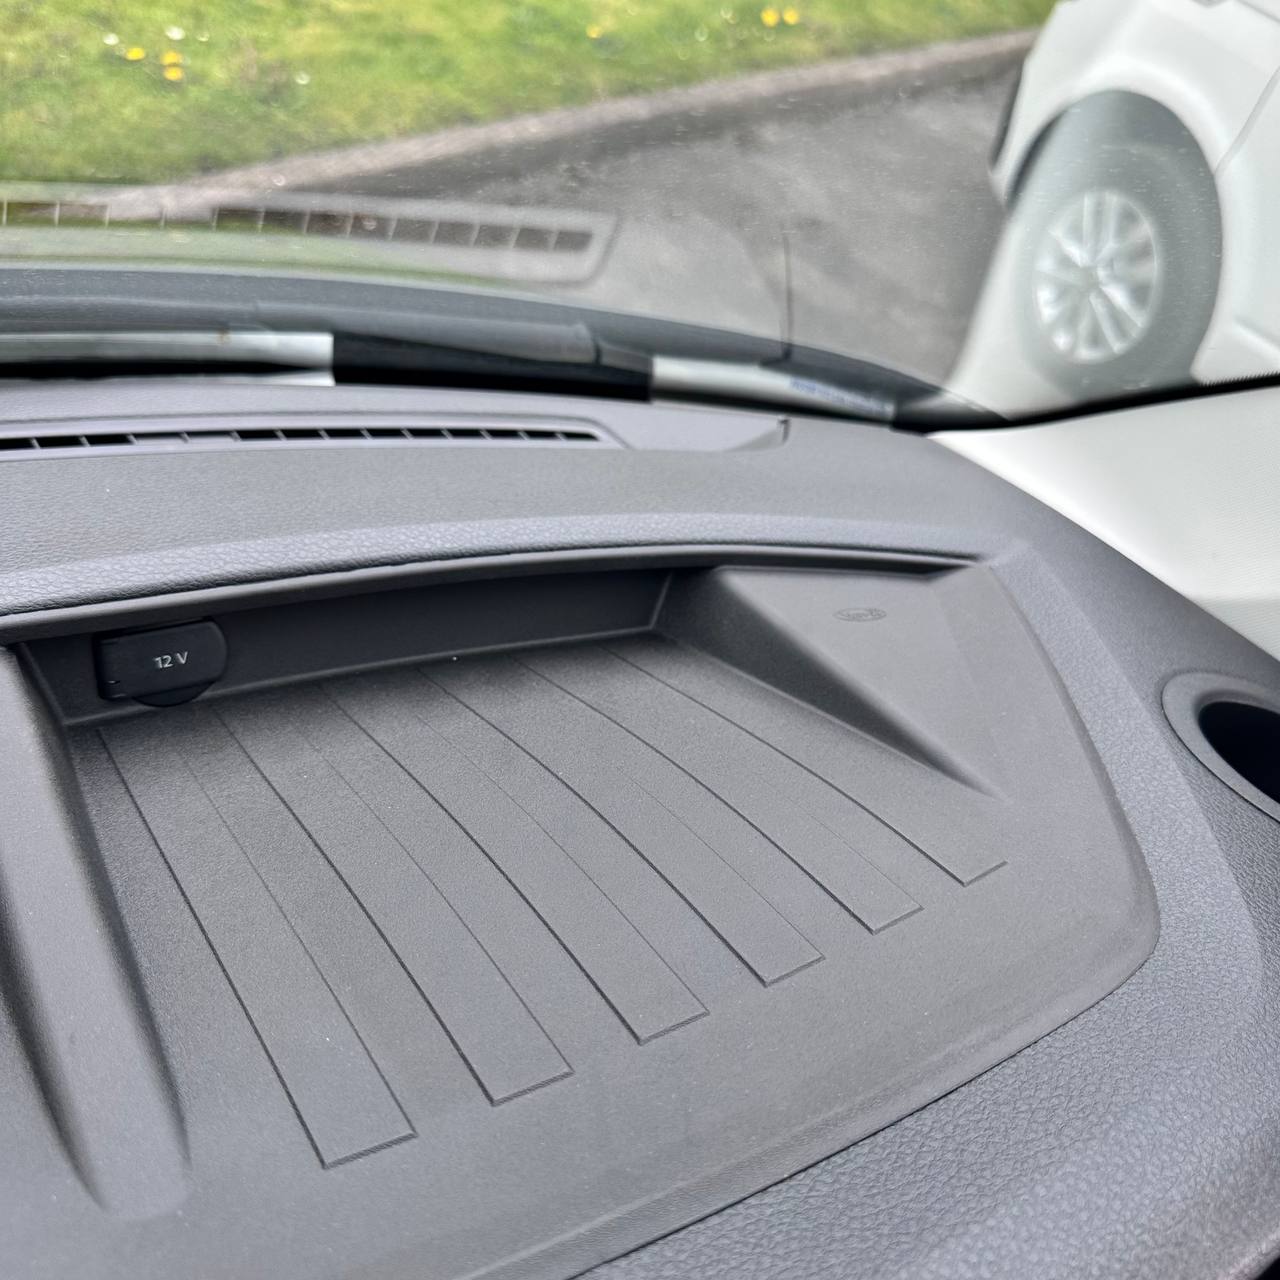 Silicone/Rubber Top Dashboard Inserts for Volkswagen Transporter T6.1 Vans – Non-Slip